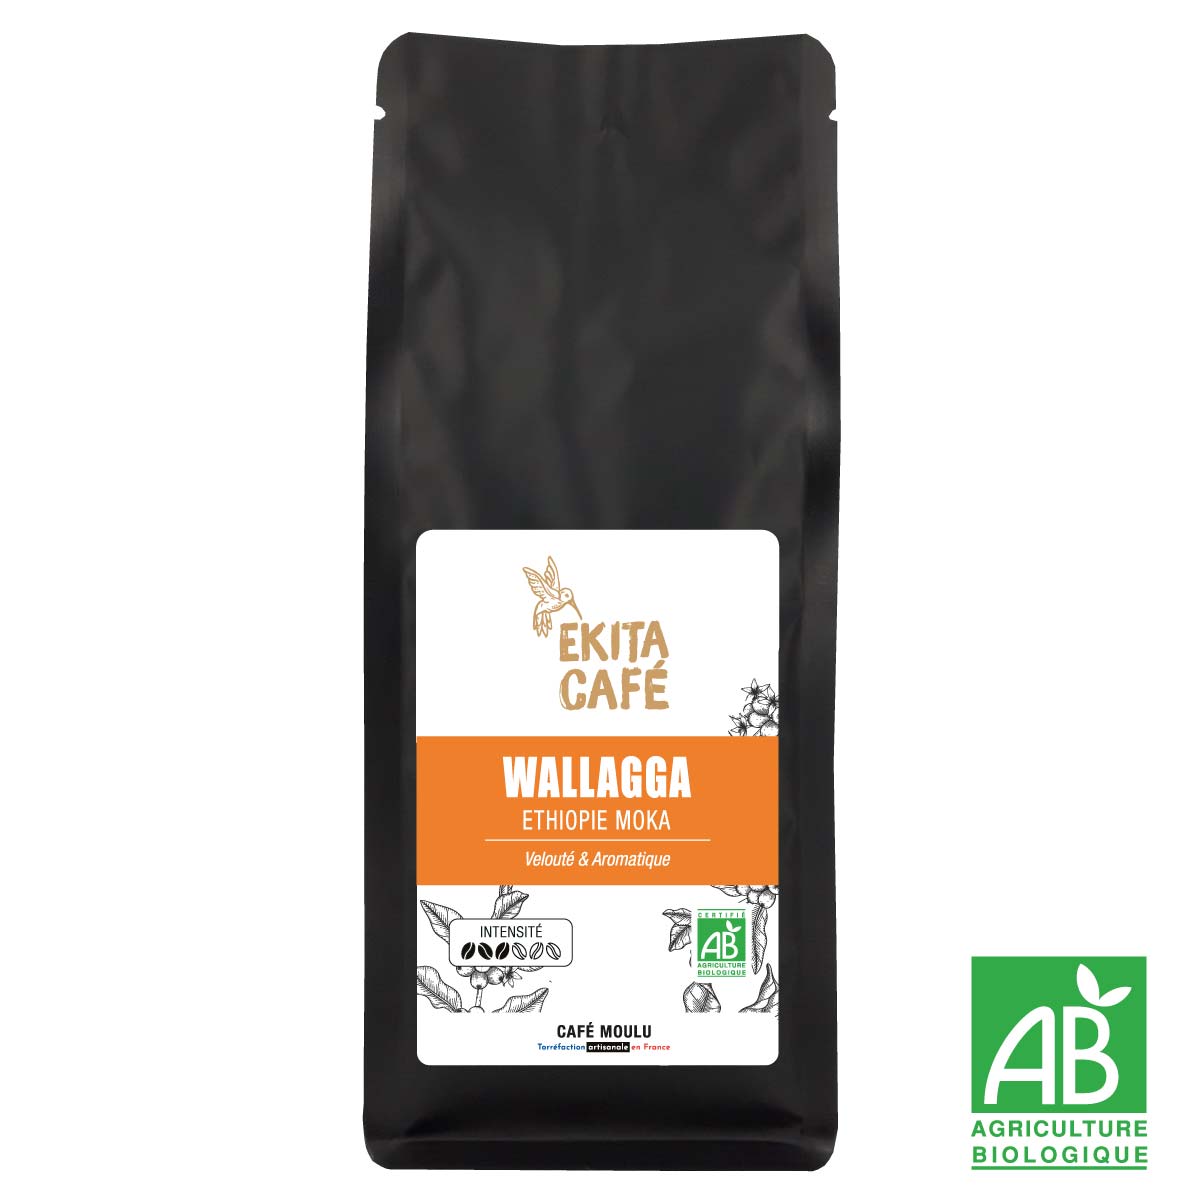 Café moulu bio Ethiopie Moka Wallagga 1 kg